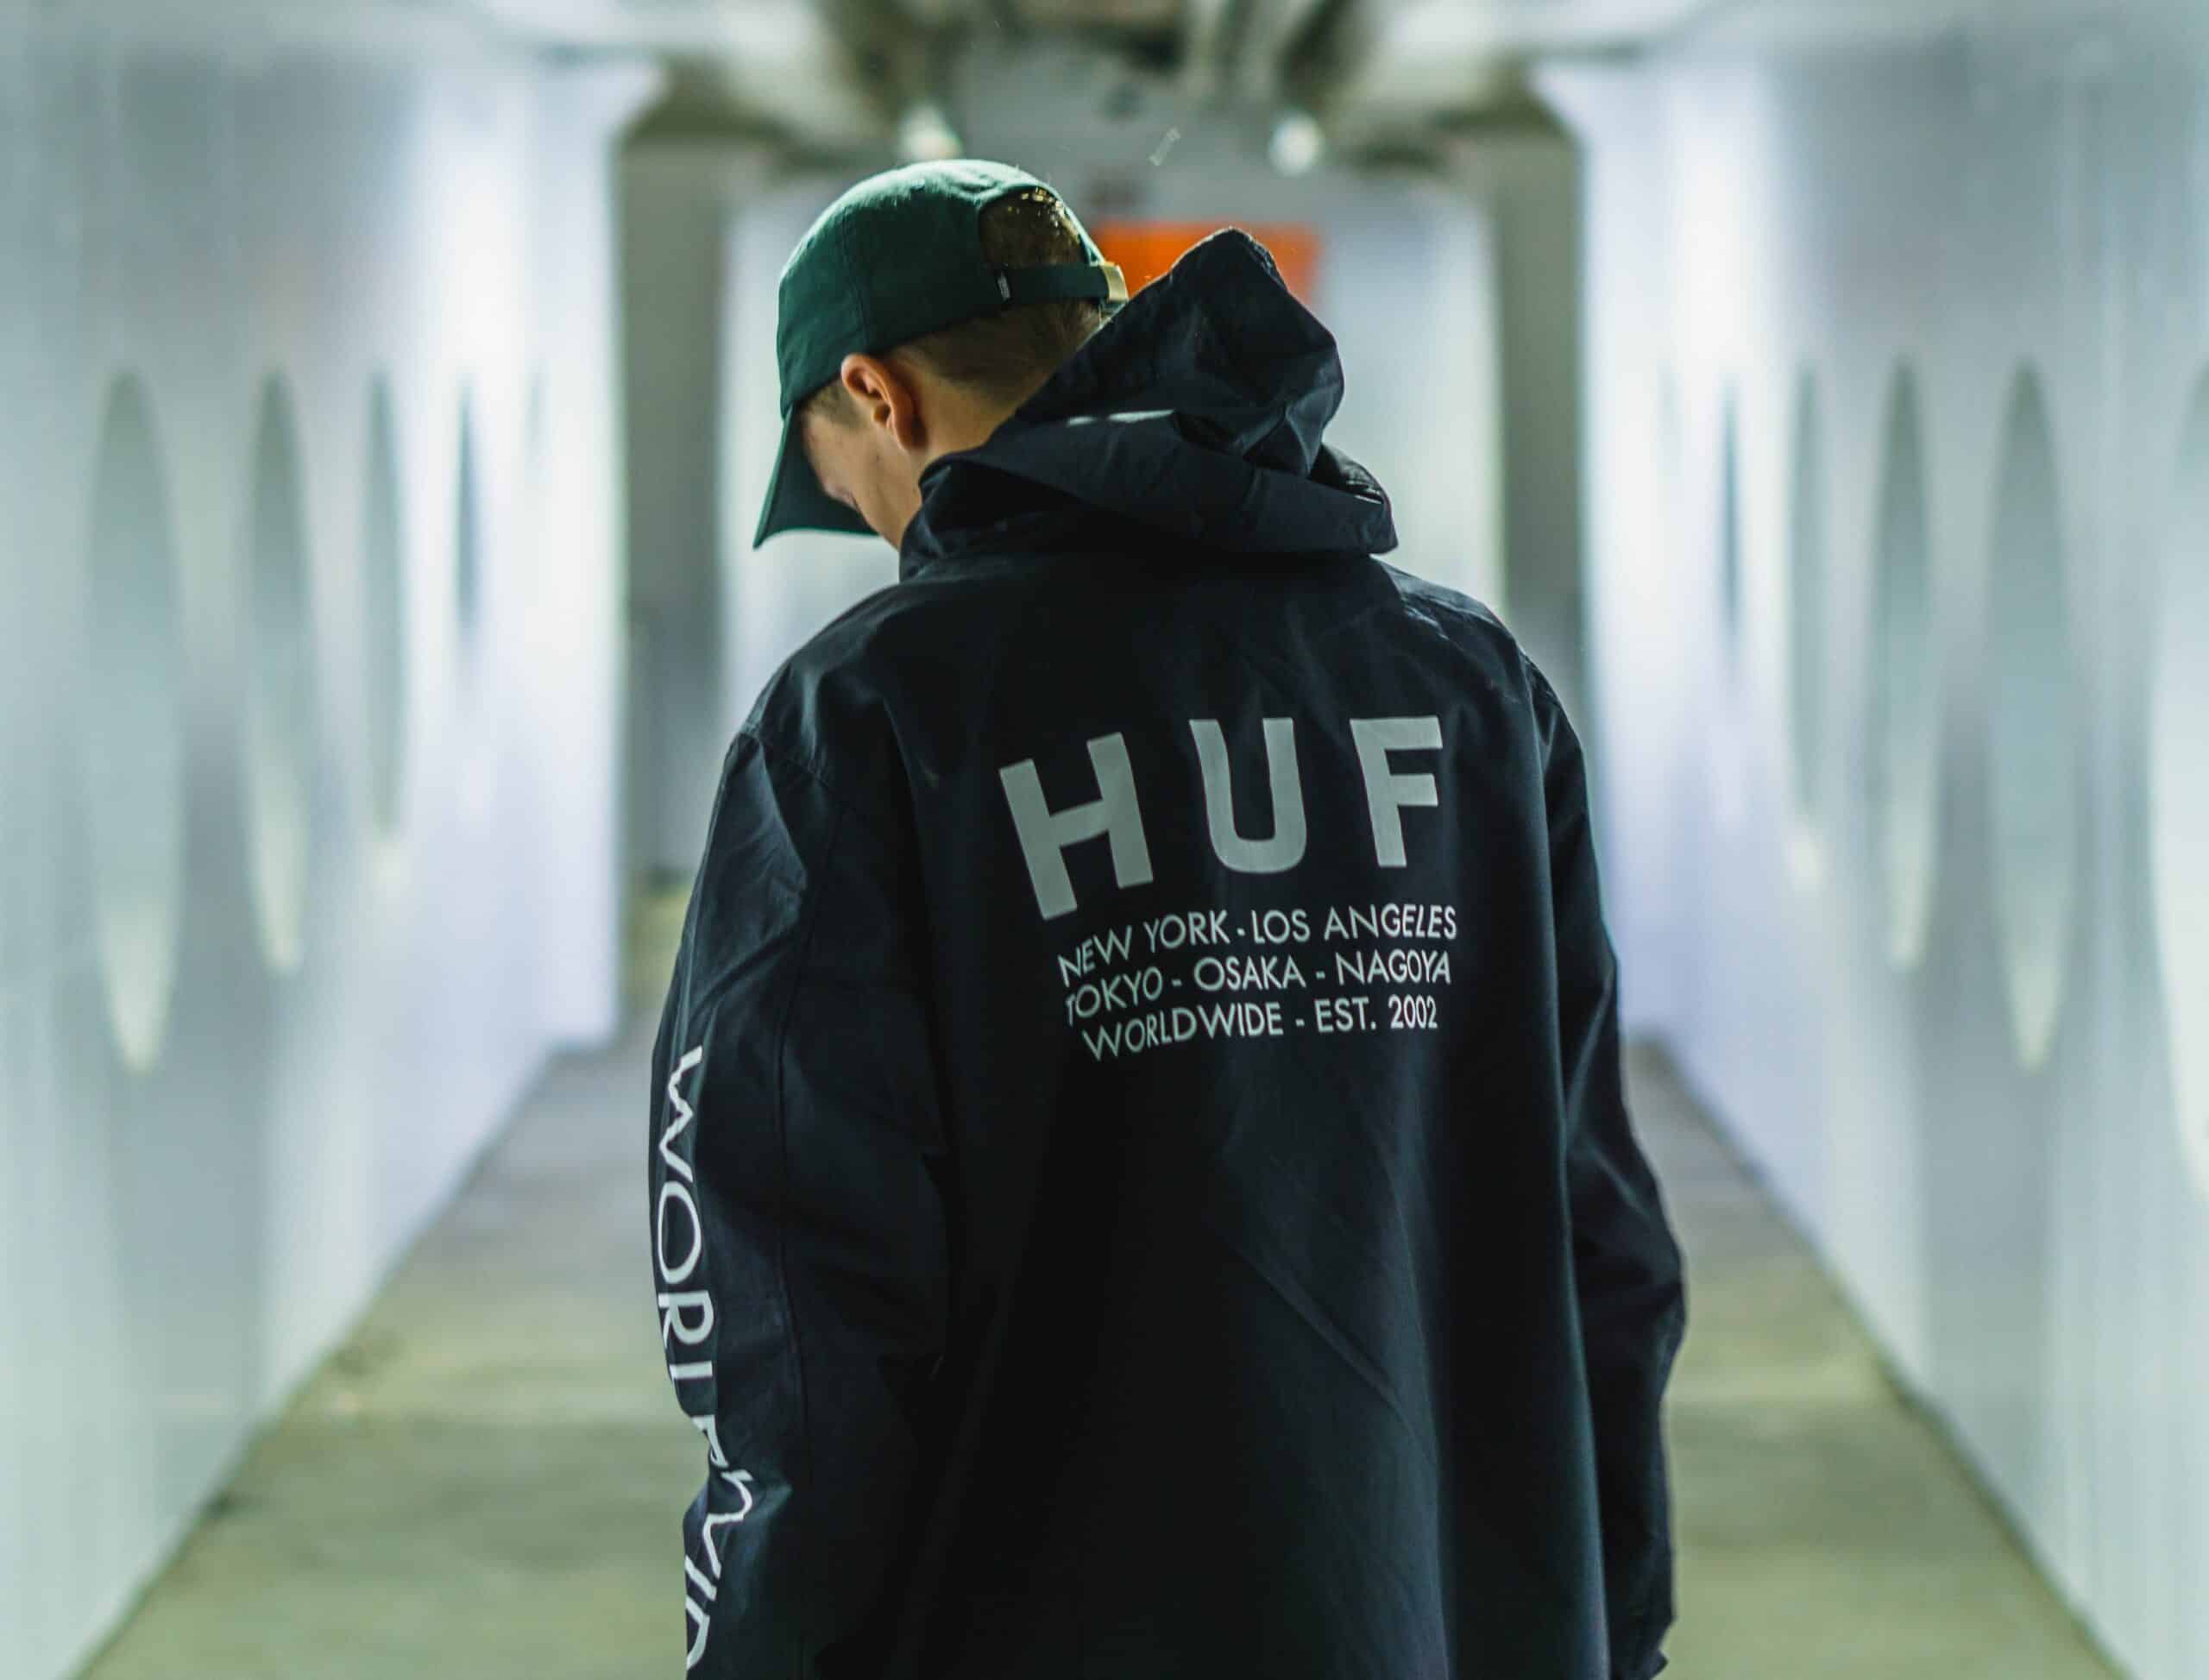 HUF streetwear brand